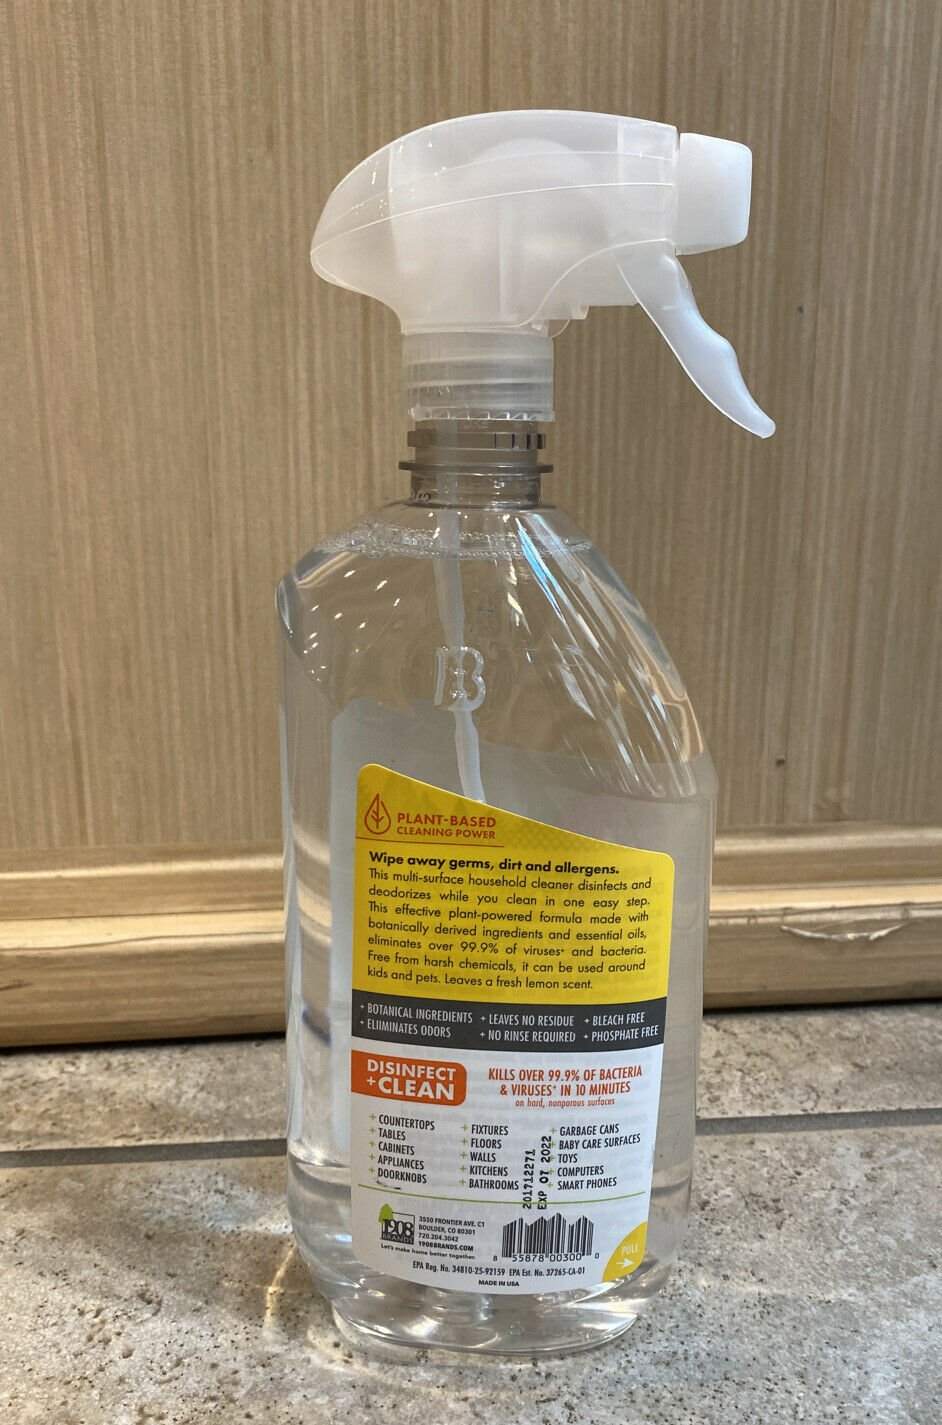 Boulder Clean Sanitizer Disinfectant Cleaner Spray